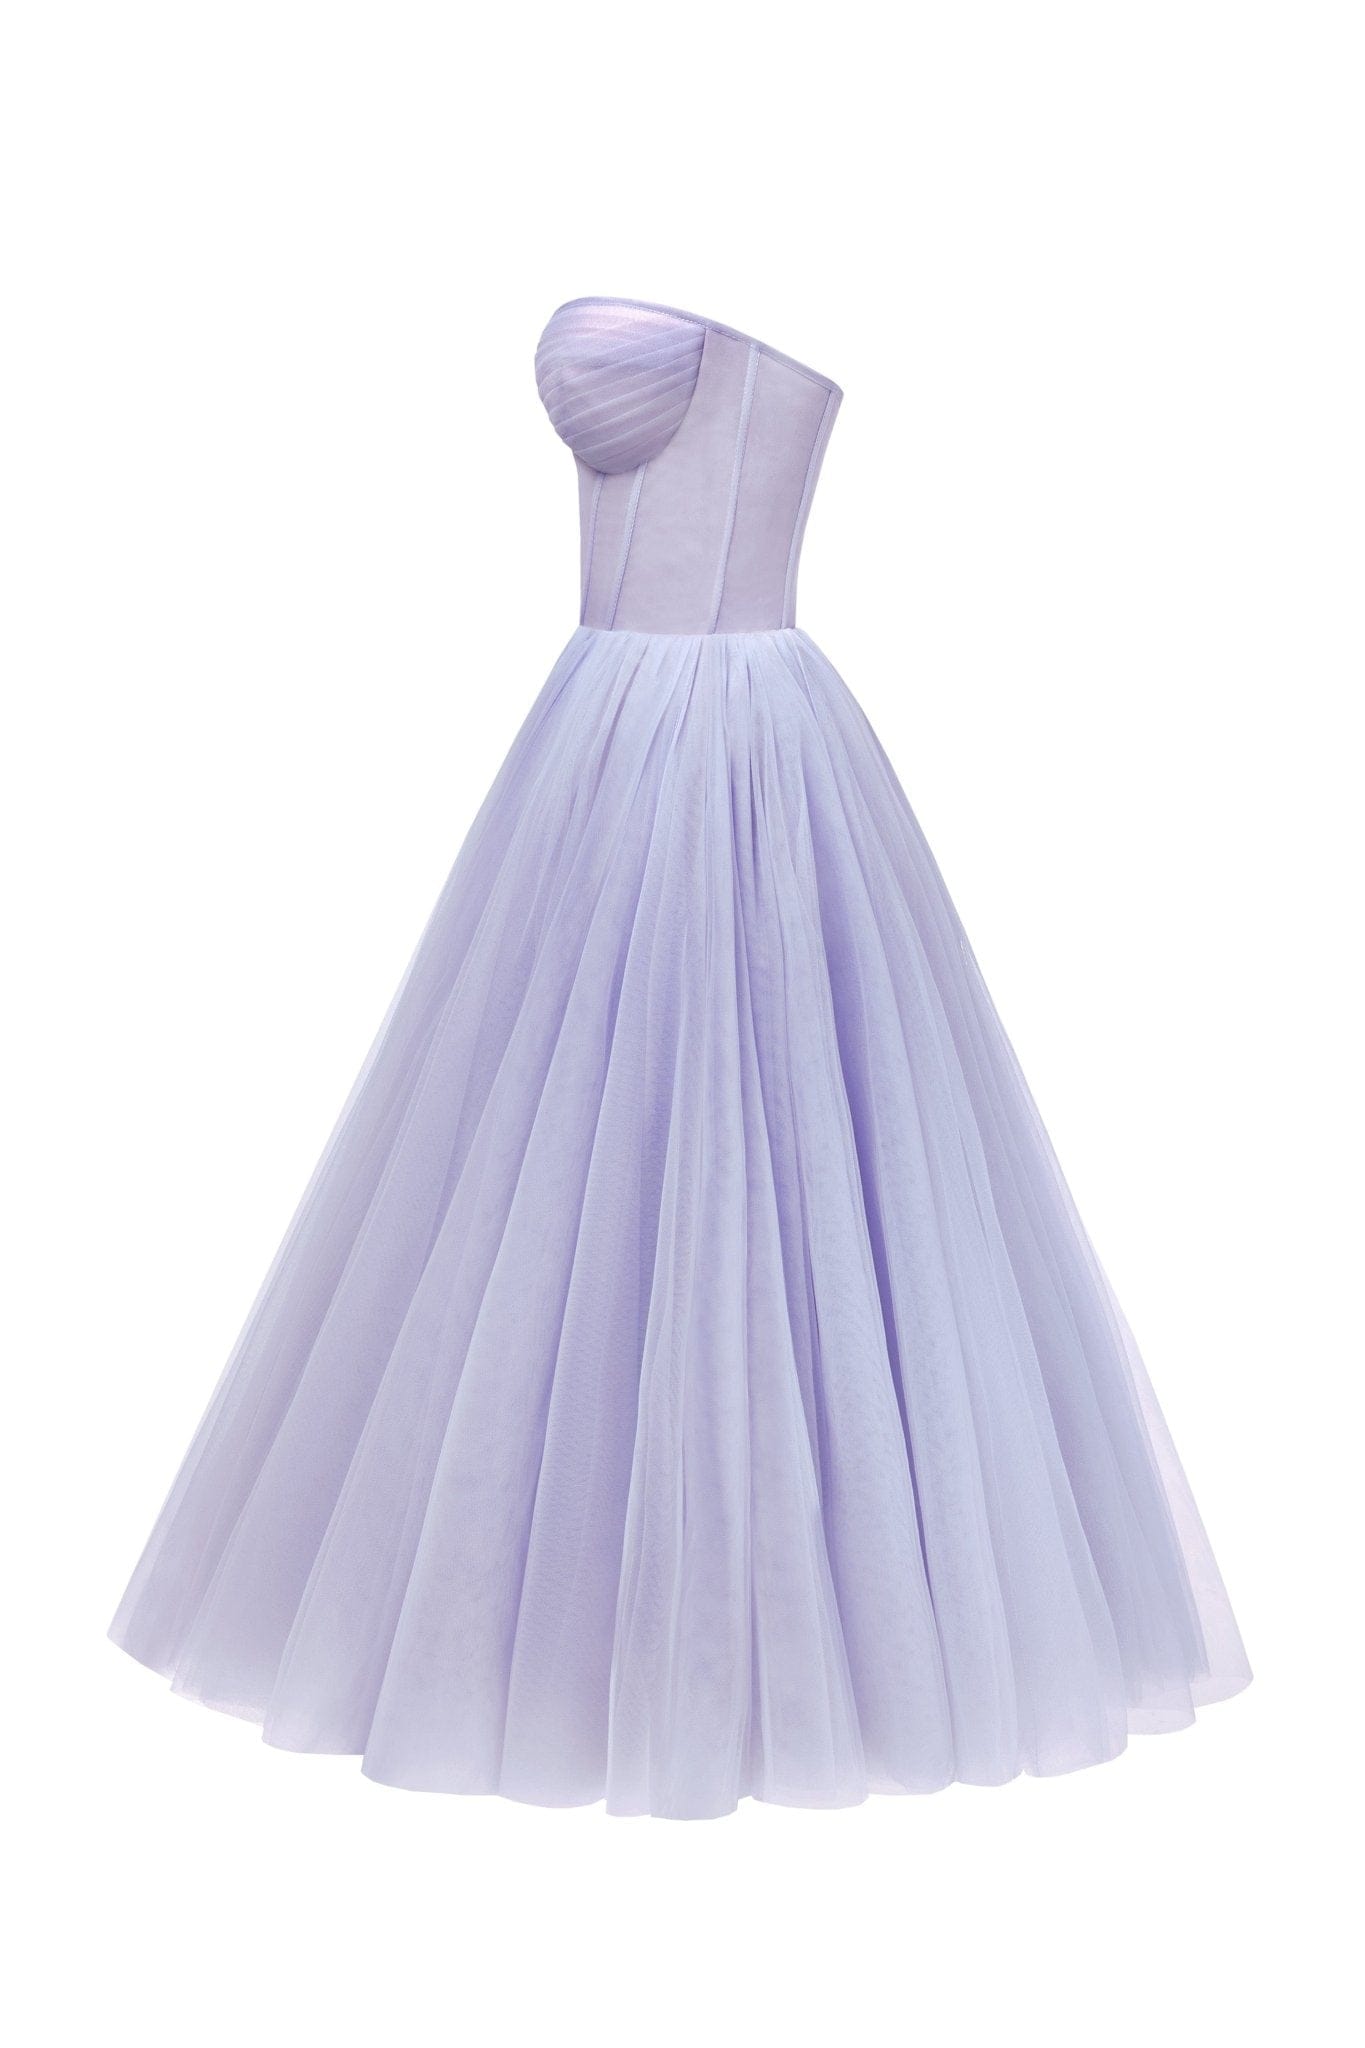 Lavender Strapless Puffy Midi Tulle Dress - Milla